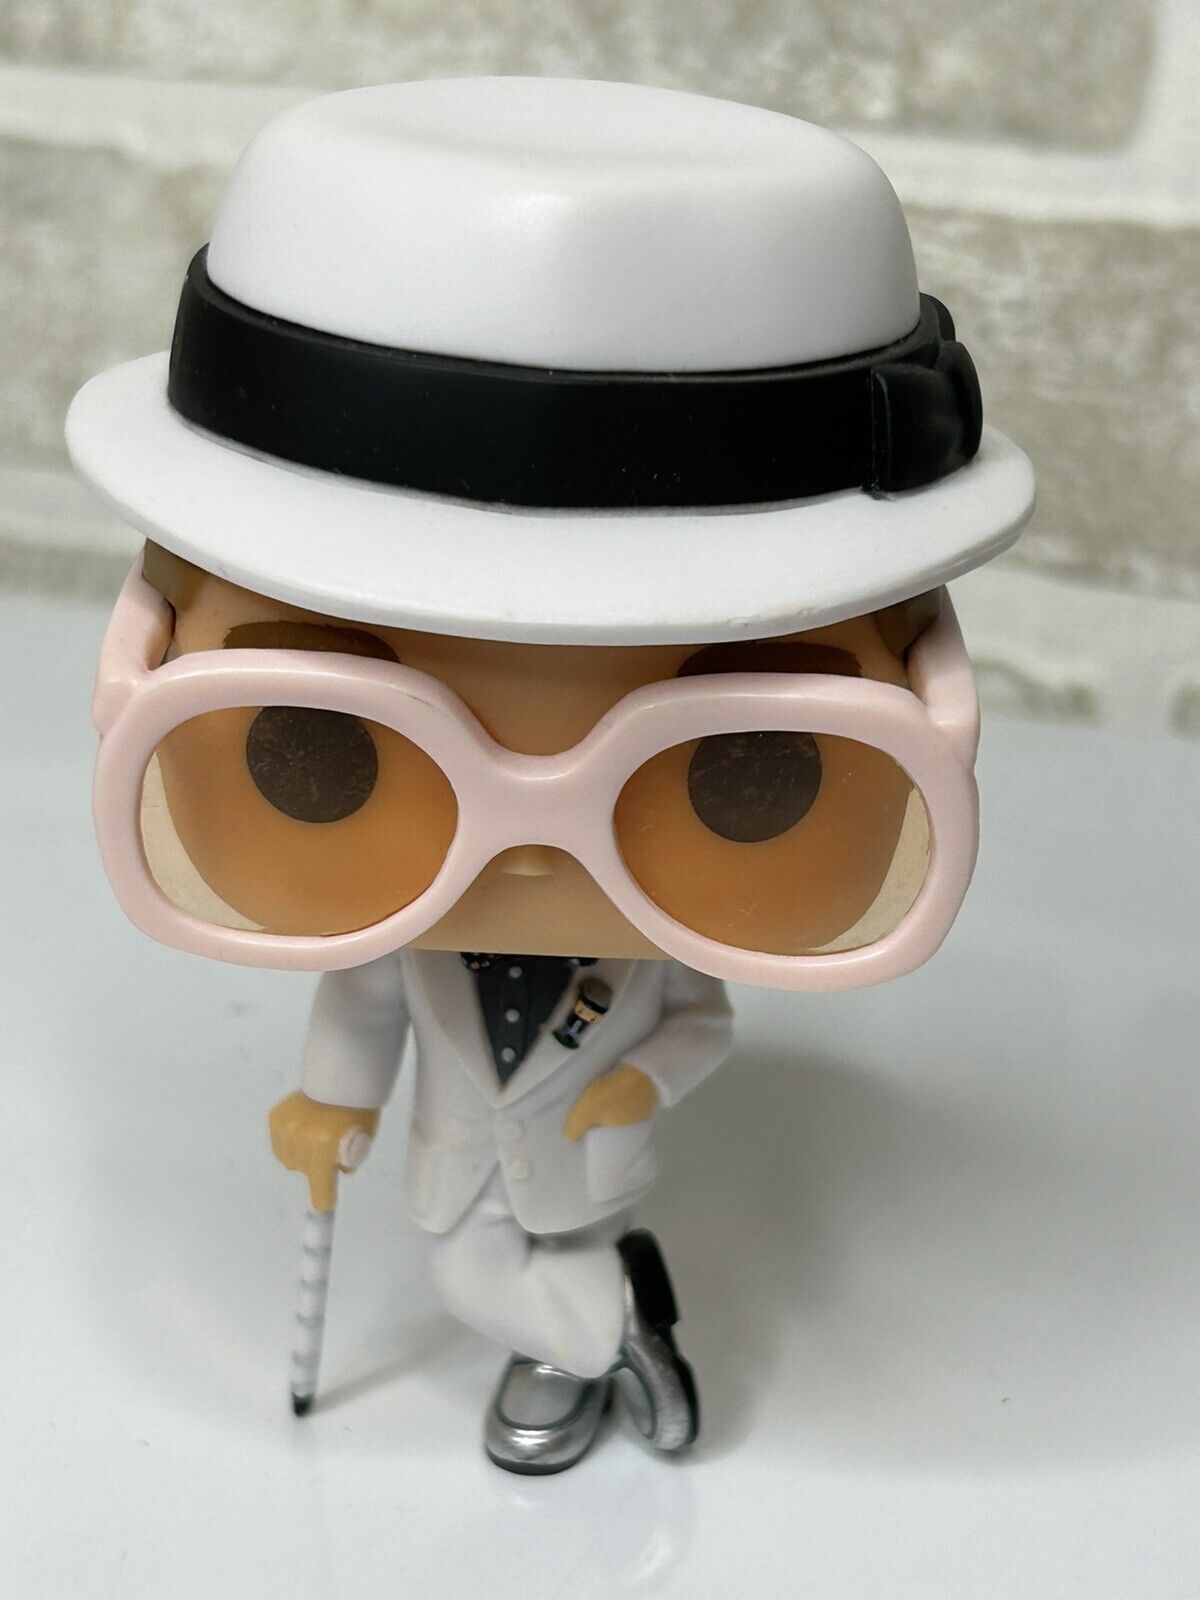 Funko POP Rocks Elton John Greatest Hits #62 Vinyl Figure - Loose (No Box)